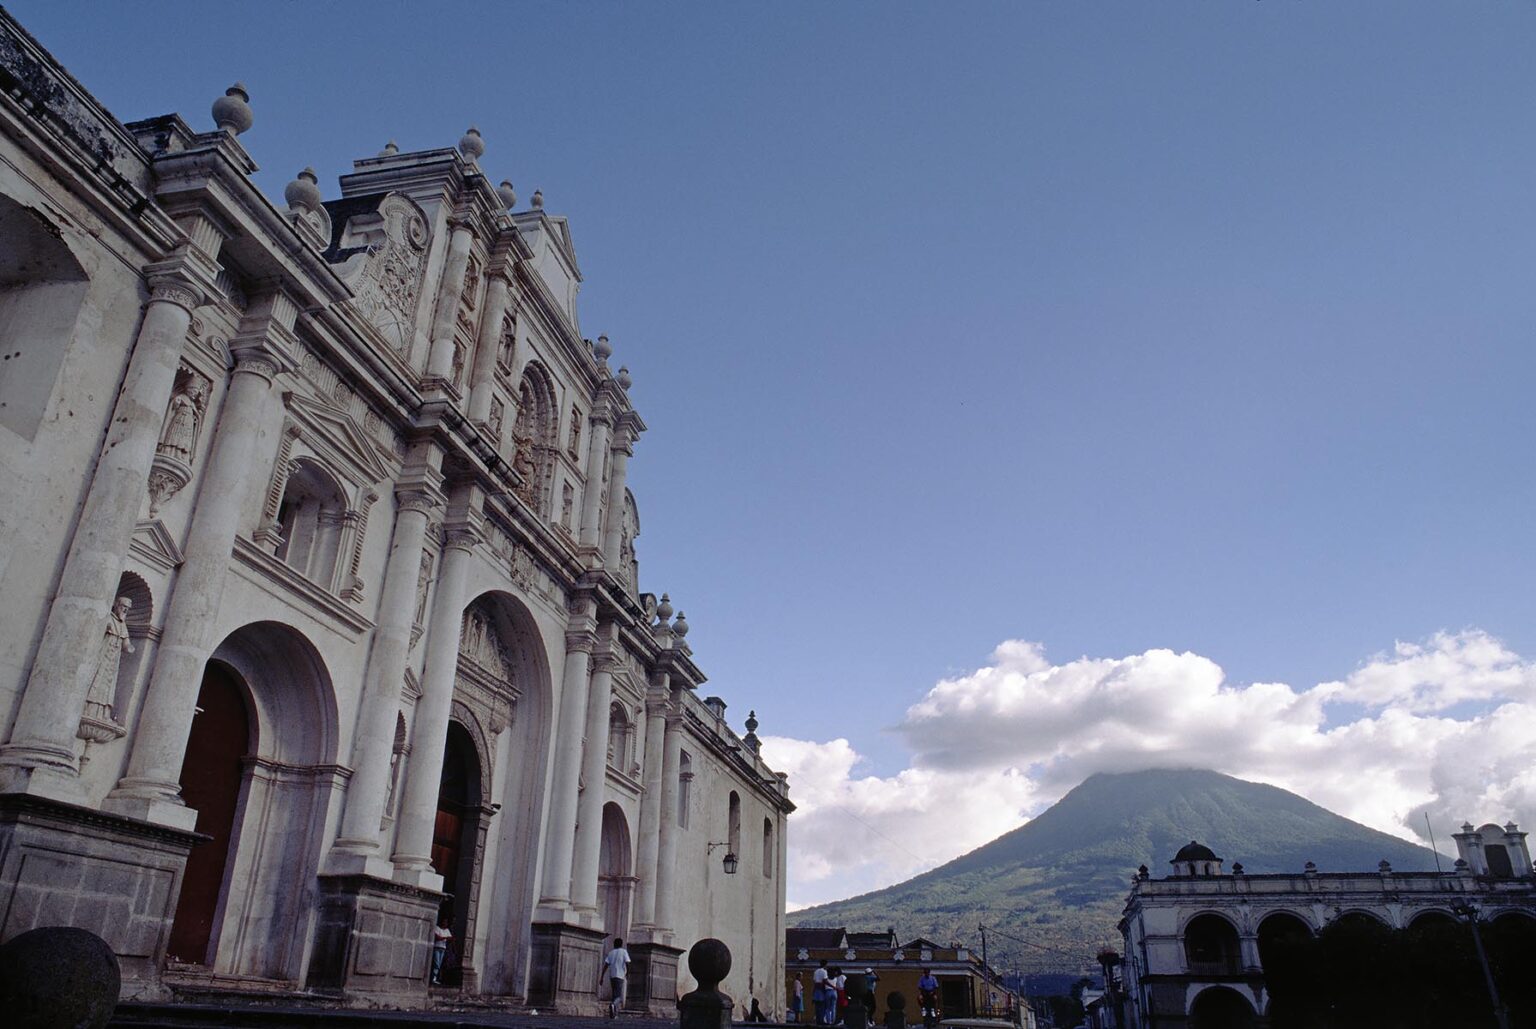 White CATHOLIC CHURCH in the main plaza with VOLCANO in distance - ANTIGUA, GUATEMALA